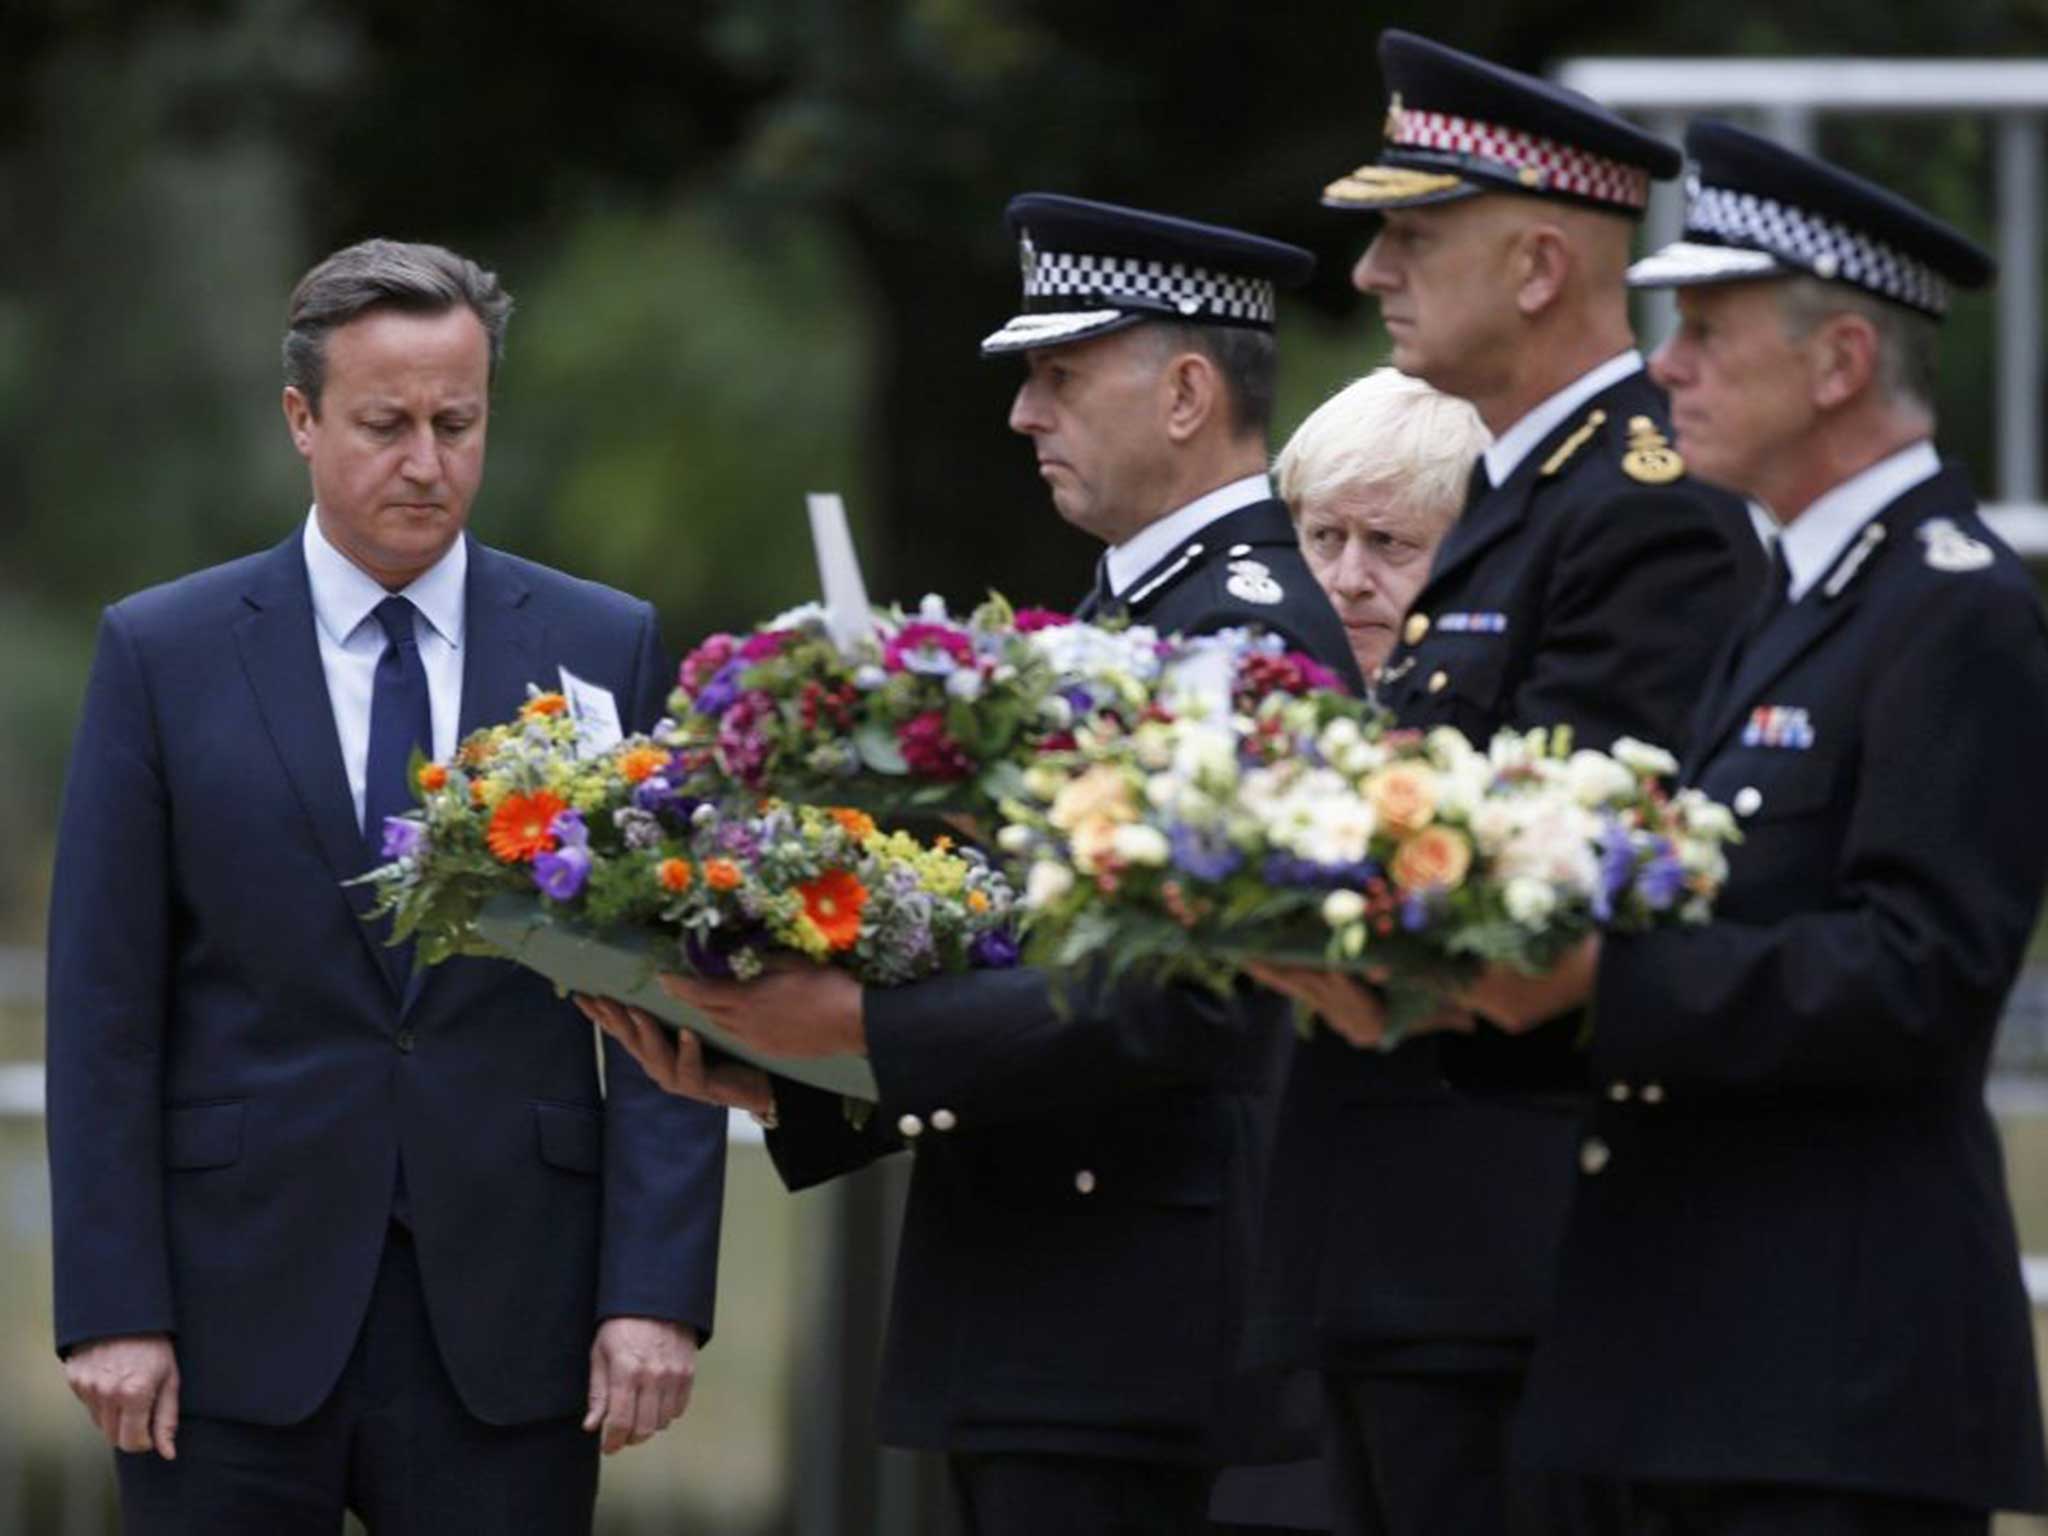 David Cameron and London Mayor Boris Johnson watch the servicemen lay wreaths in Hyde Park